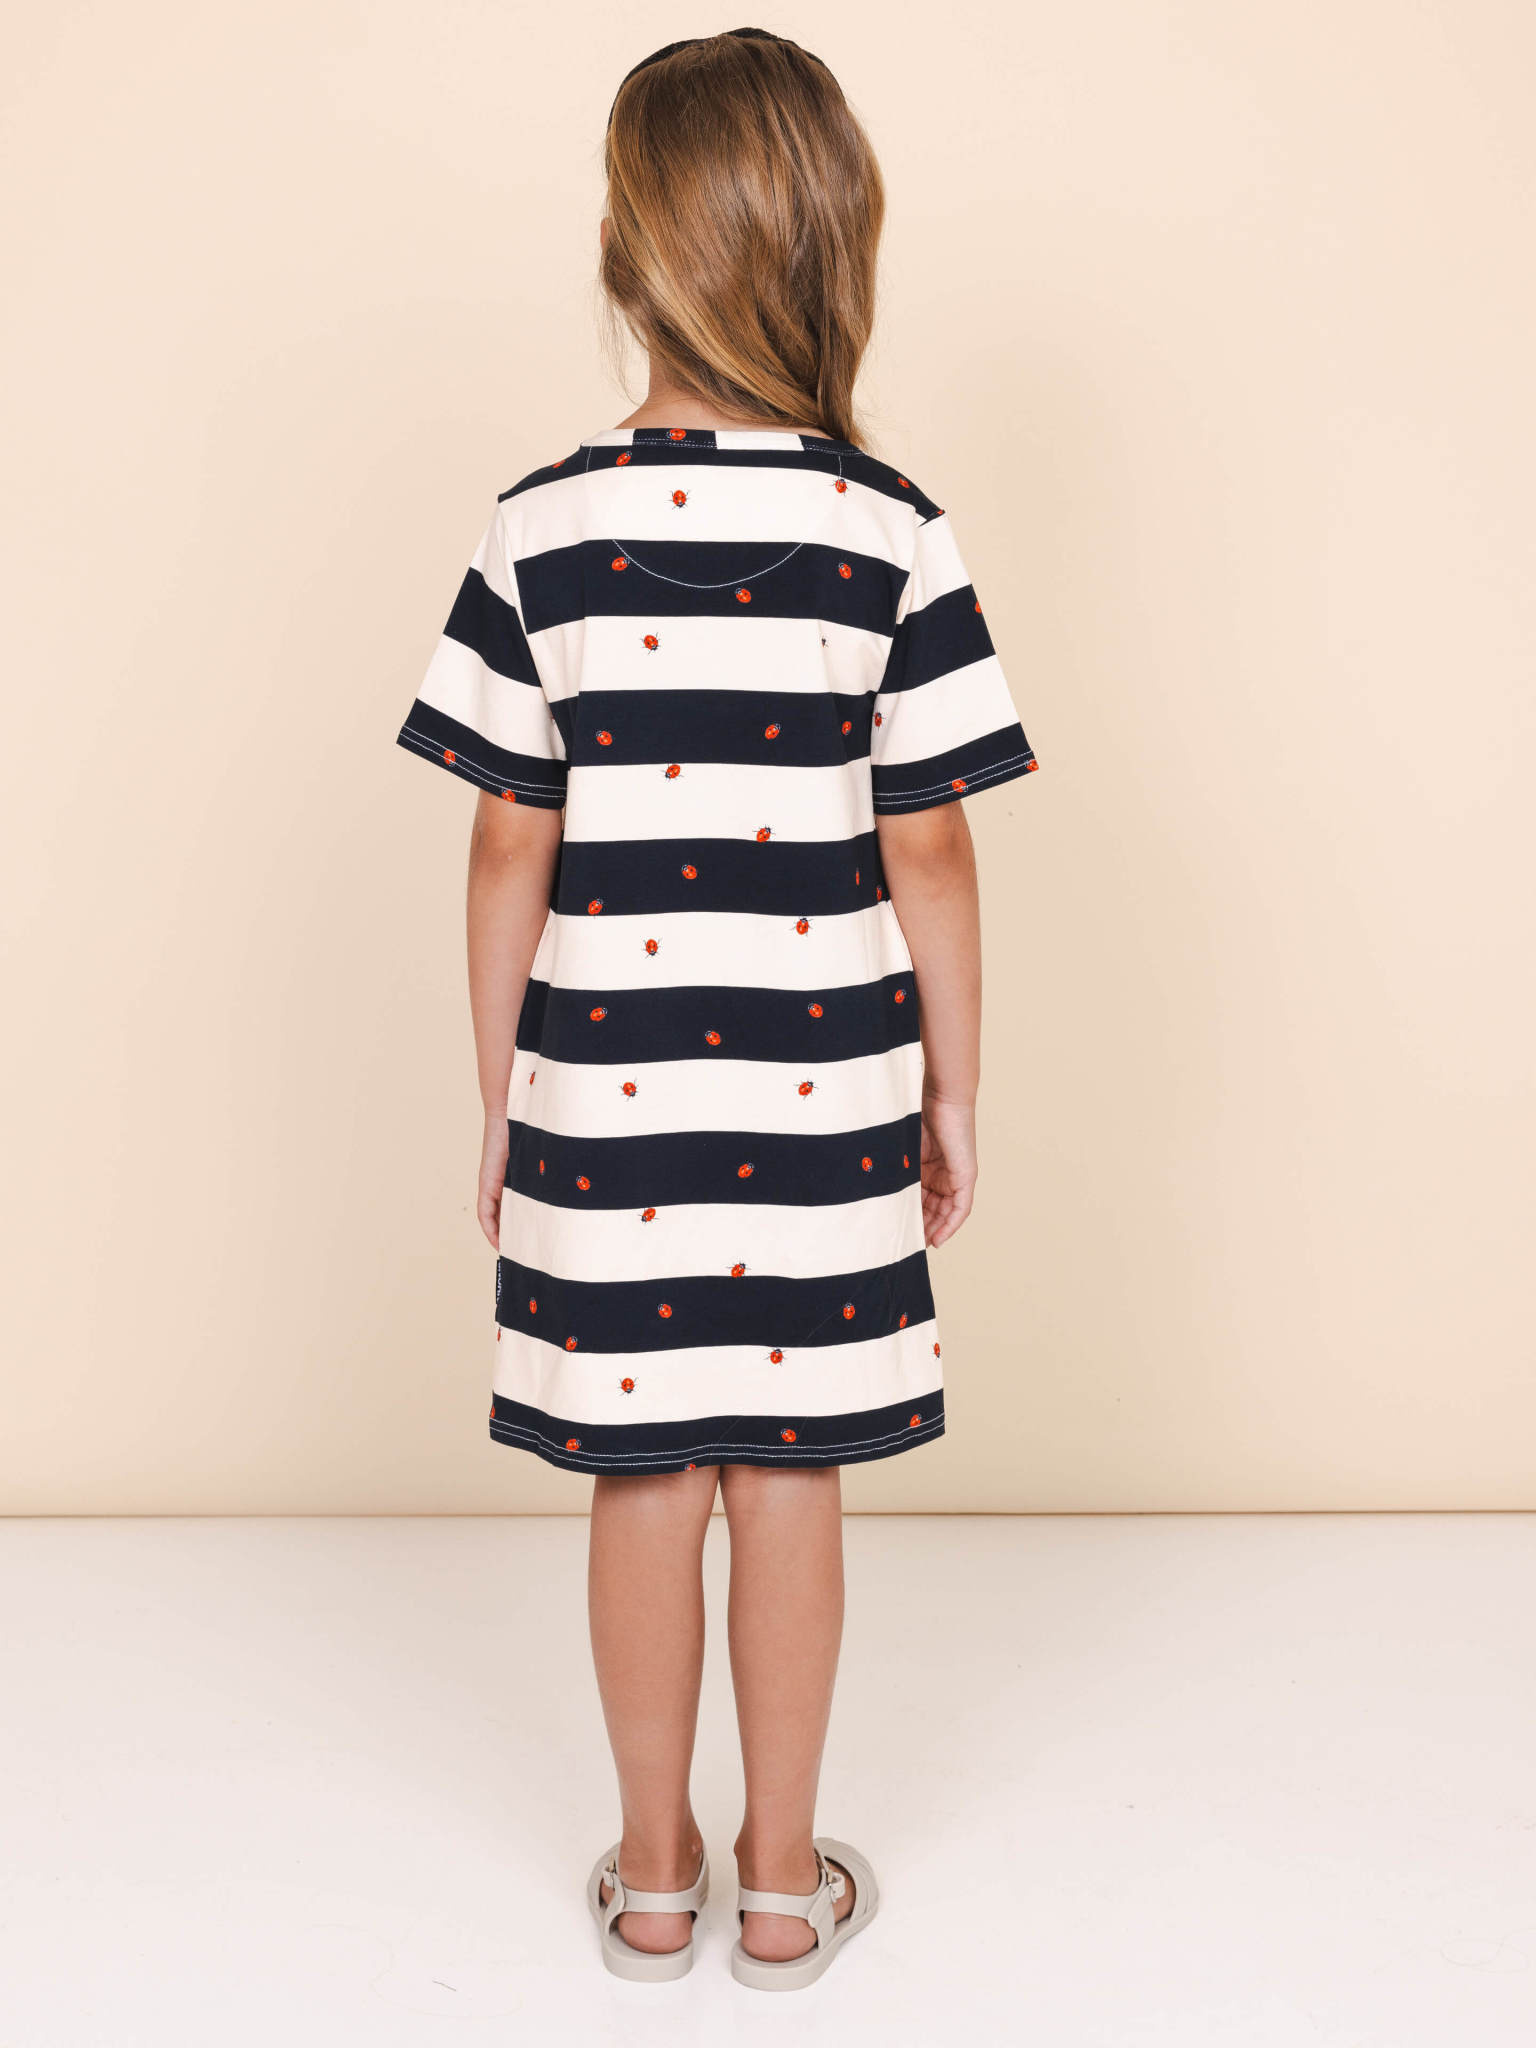 SNURK Snurk homewear - Ladybug T-shirt dress kids - 104